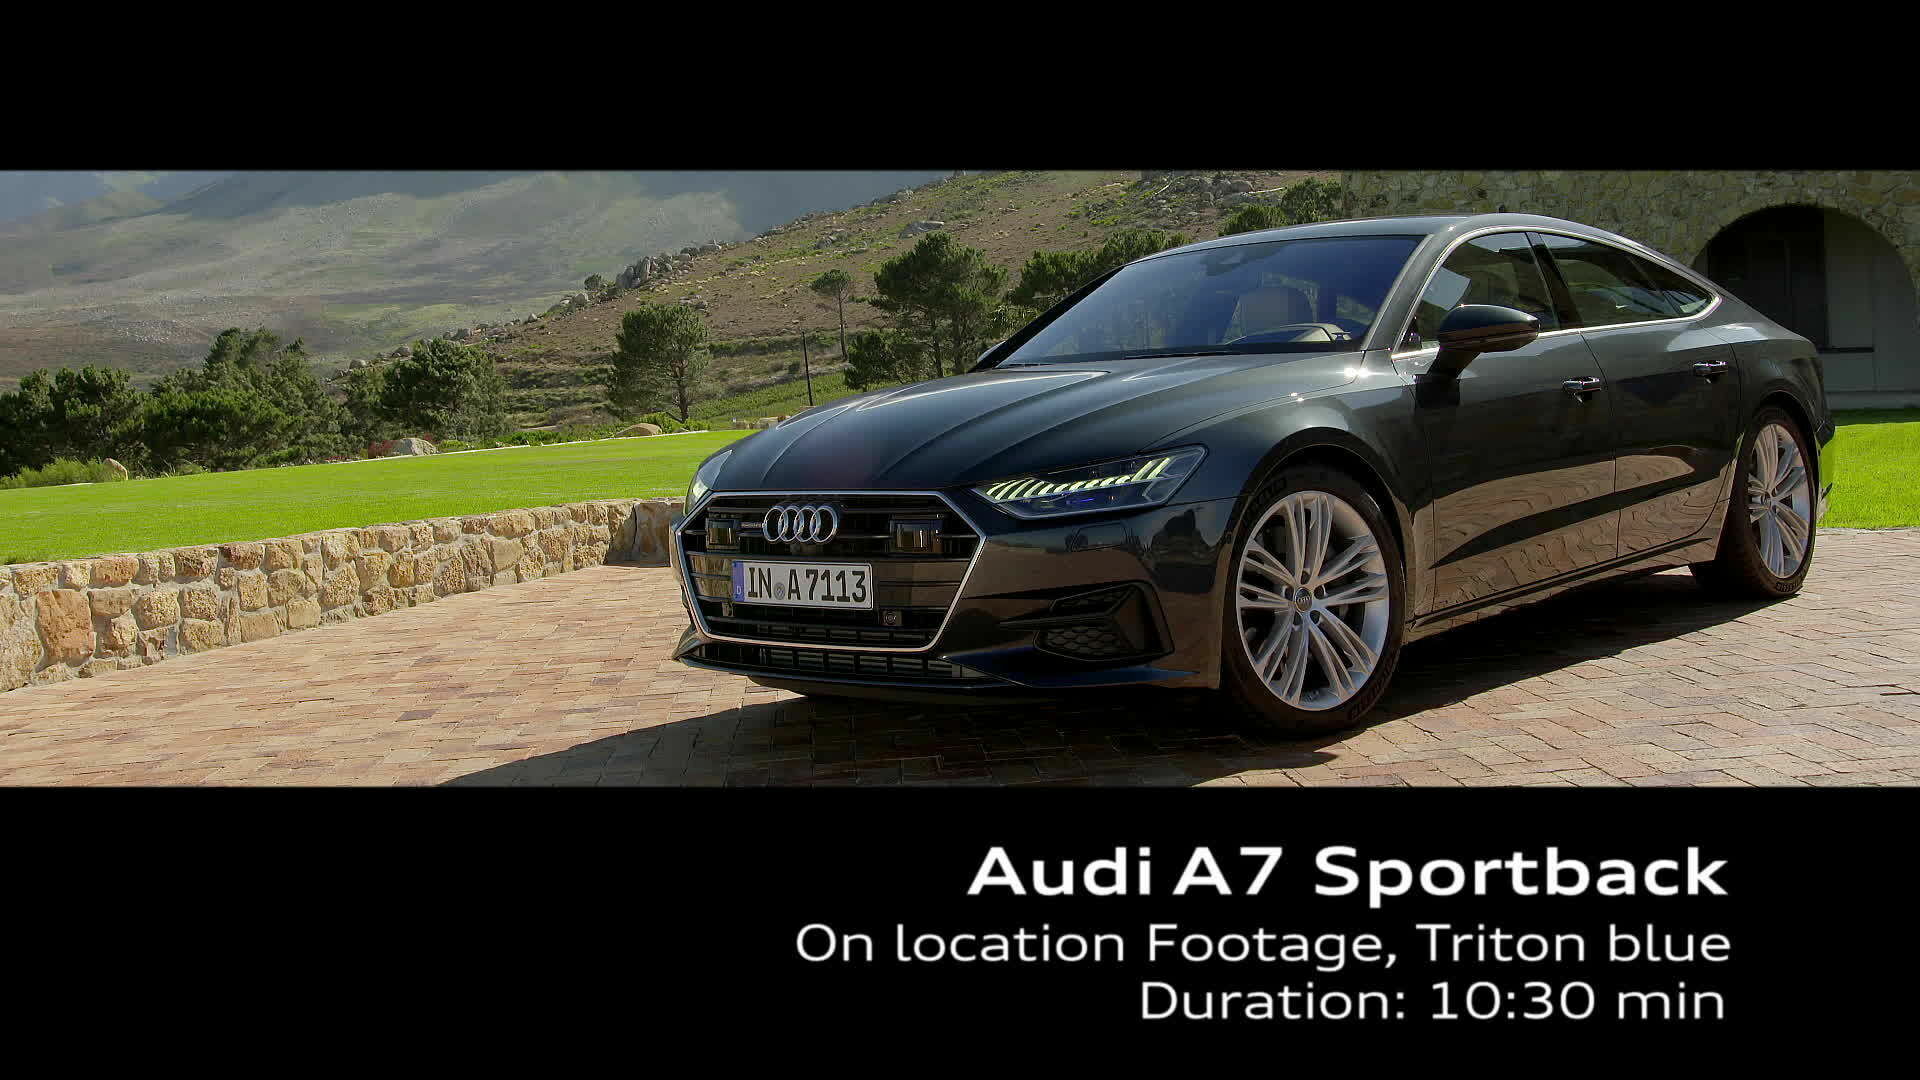 Audi A7 Sportback in Triton blue – on Location Footage Kapstadt